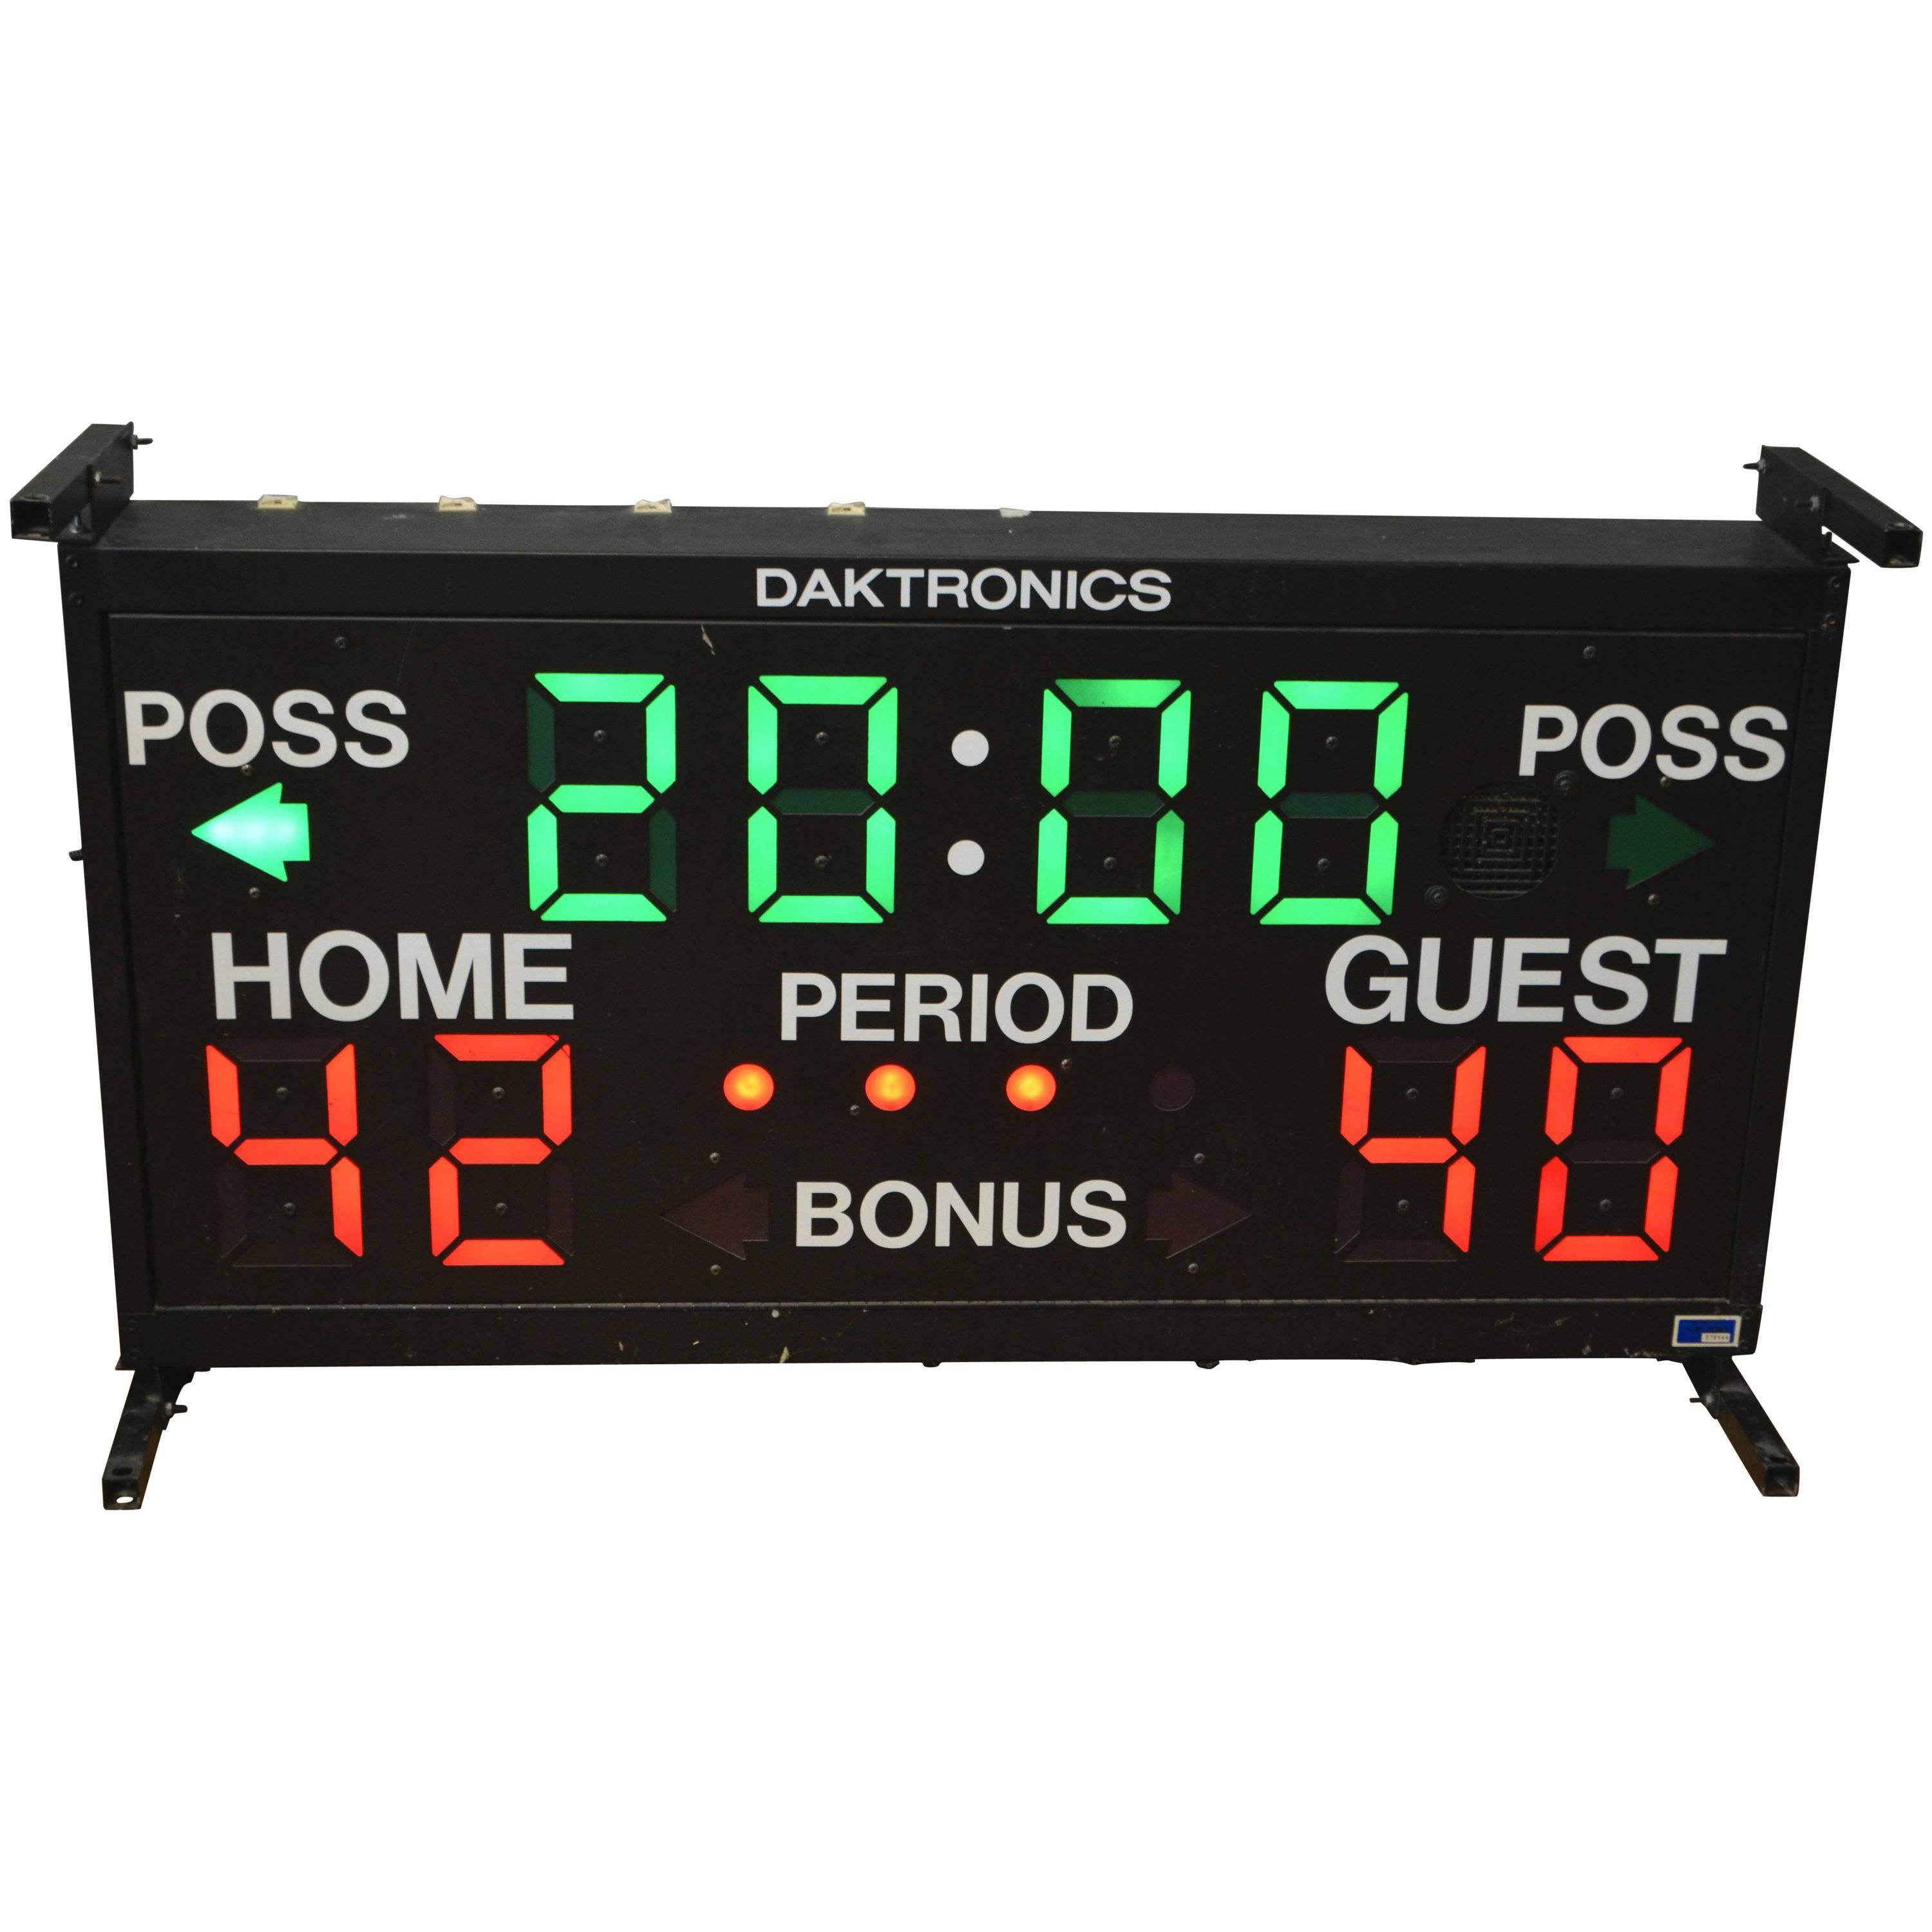 Basketball Scoreboard from Daktronics